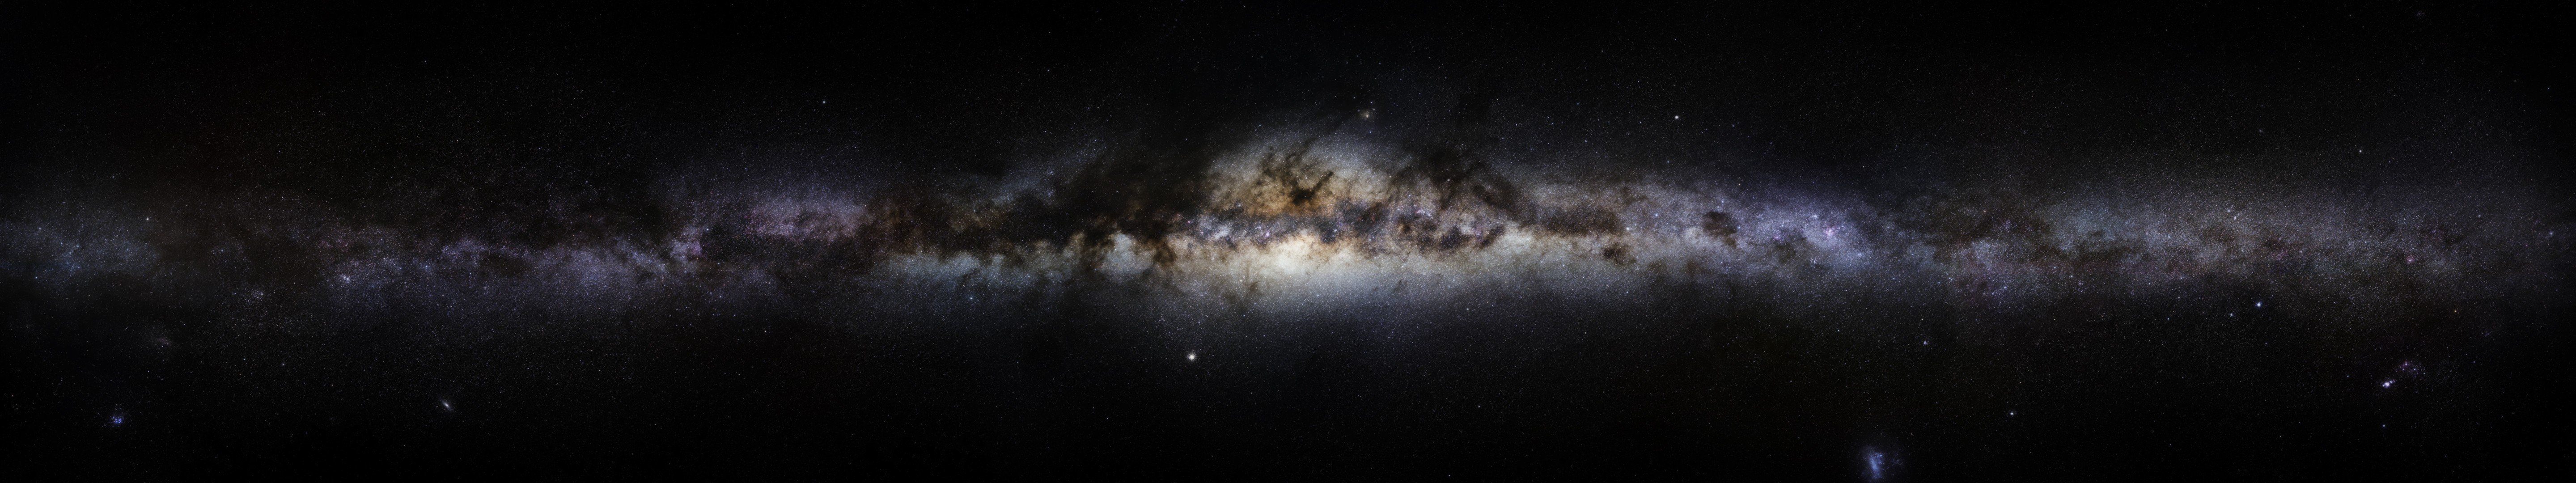 Nature panorama Milky Way multiscreen wallpaper | 5760x1080 ...